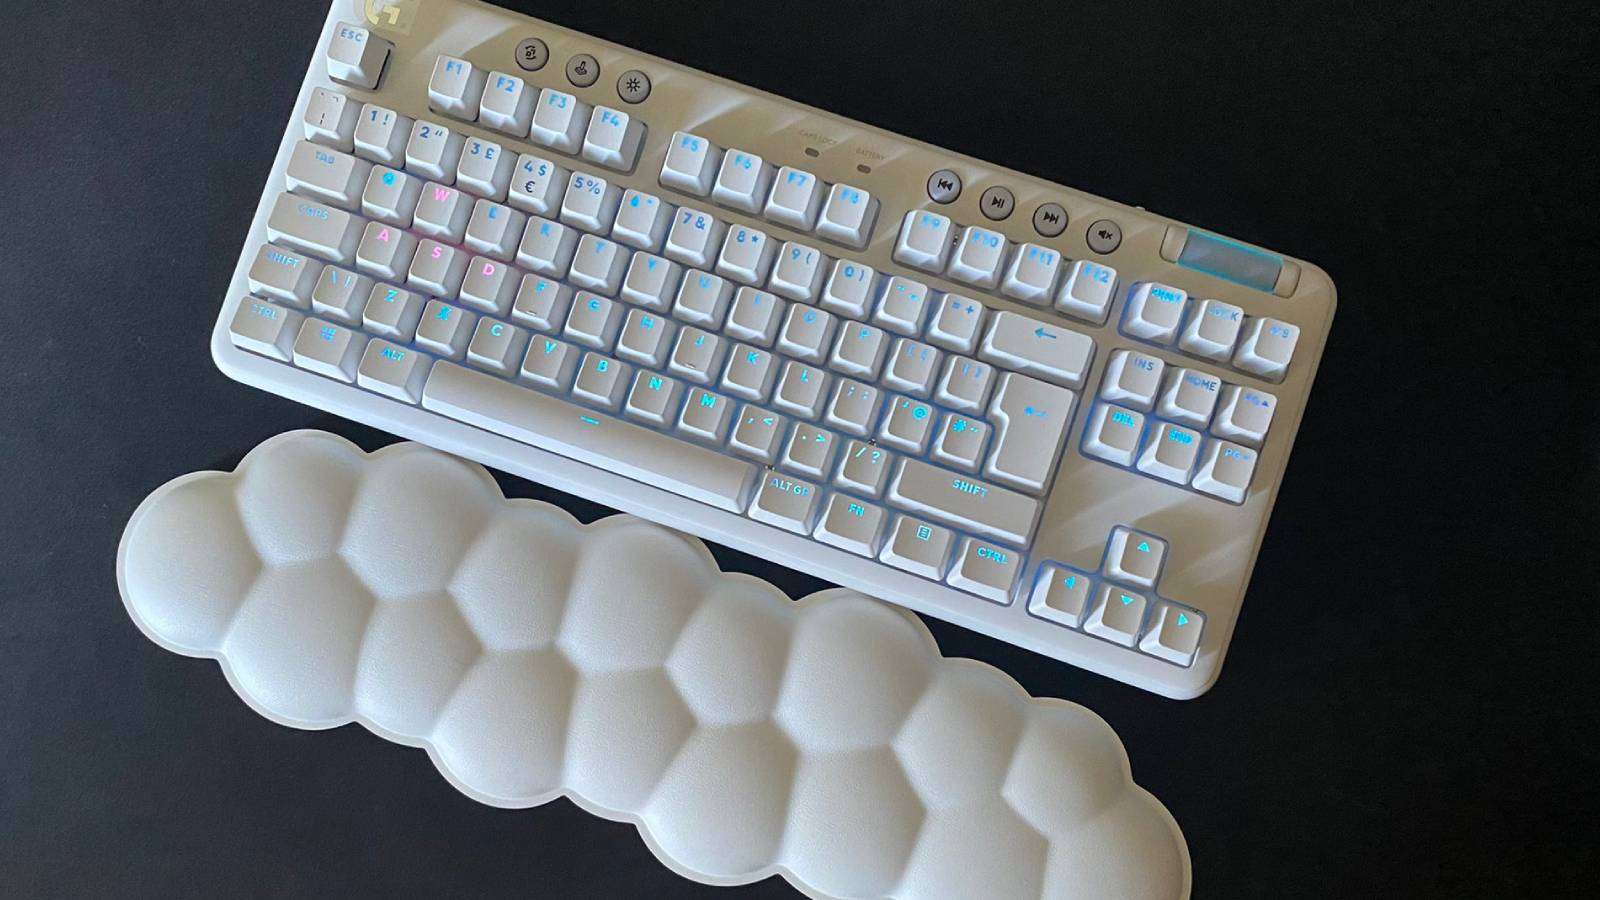 G715 keyboard with wrist pad